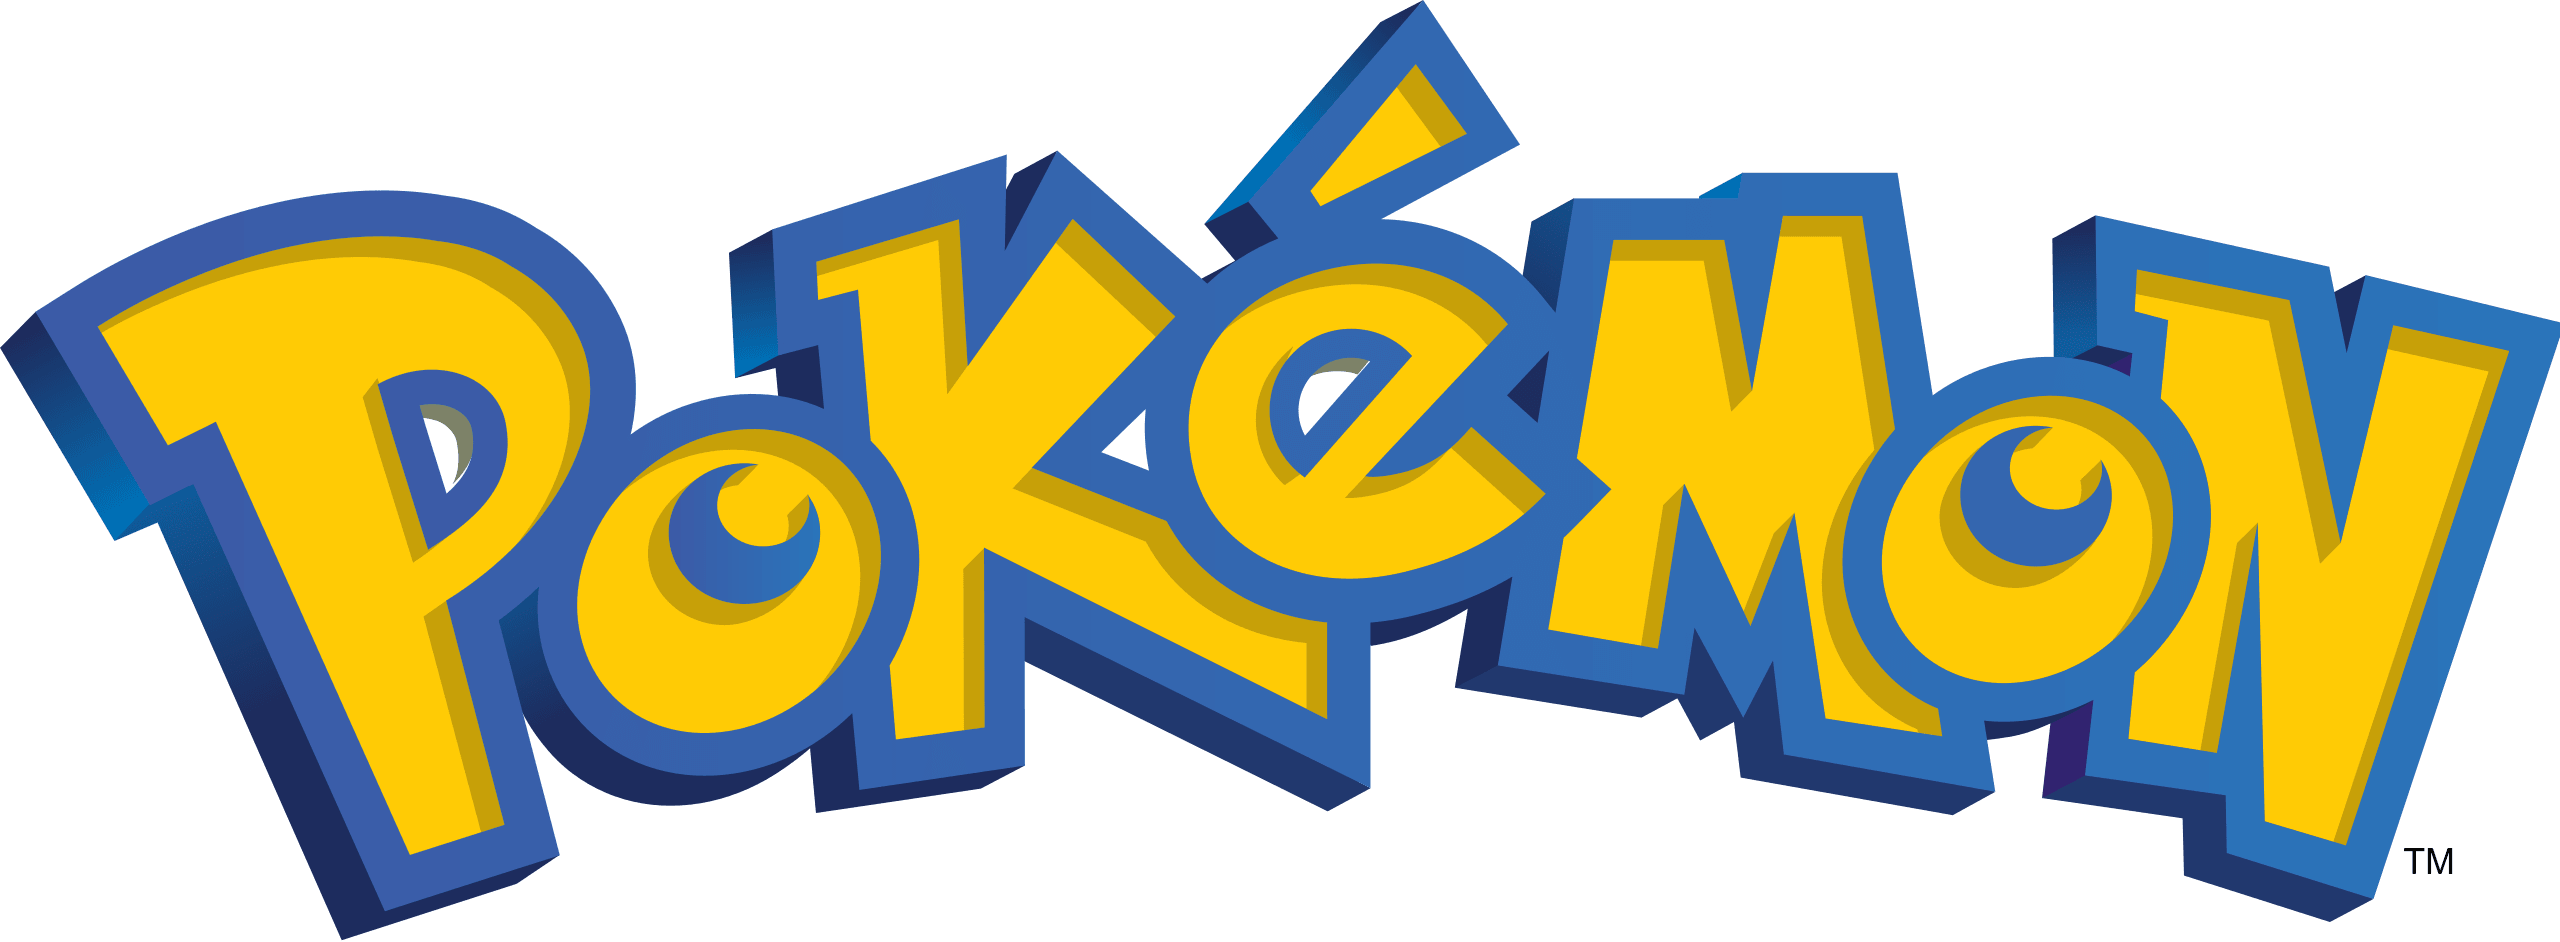 Pokemon Booster Box (36 Packs) - Scarlet & Violet - Paradox Rift - Hobby Champion Inc